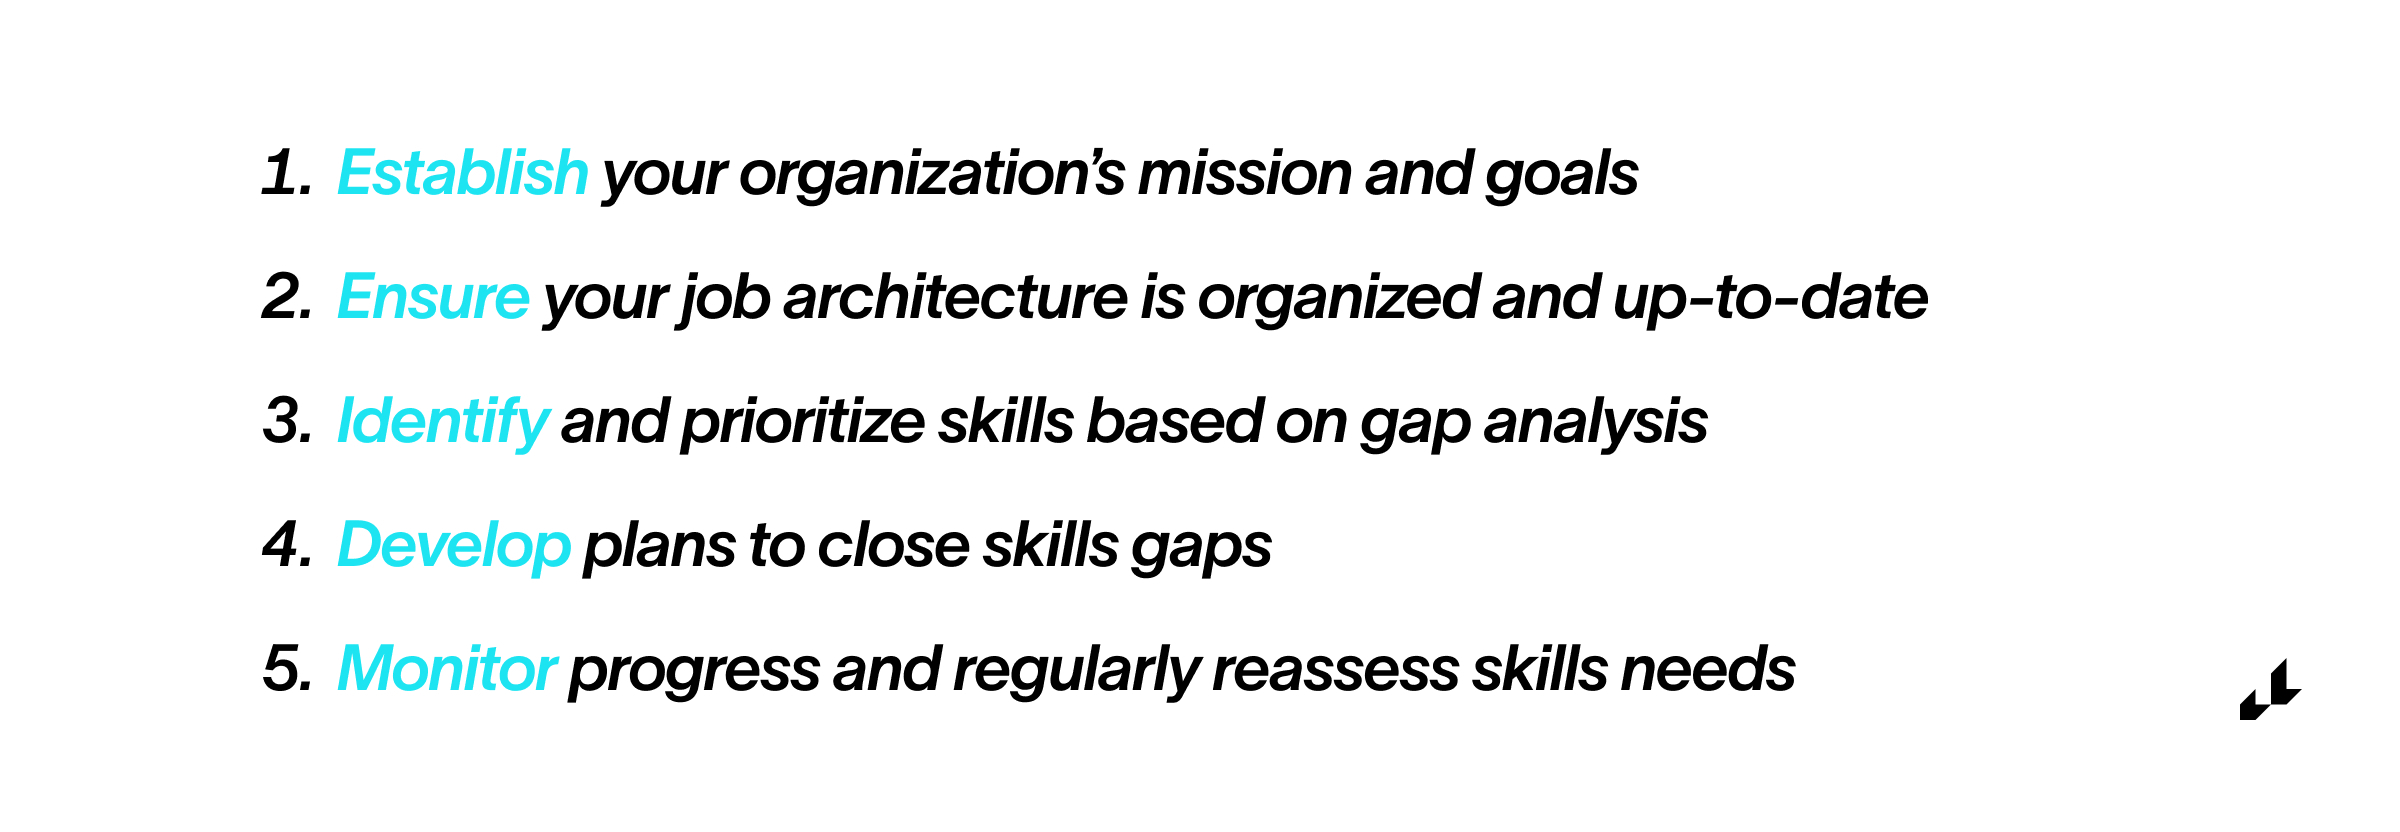 skills gap analysis template